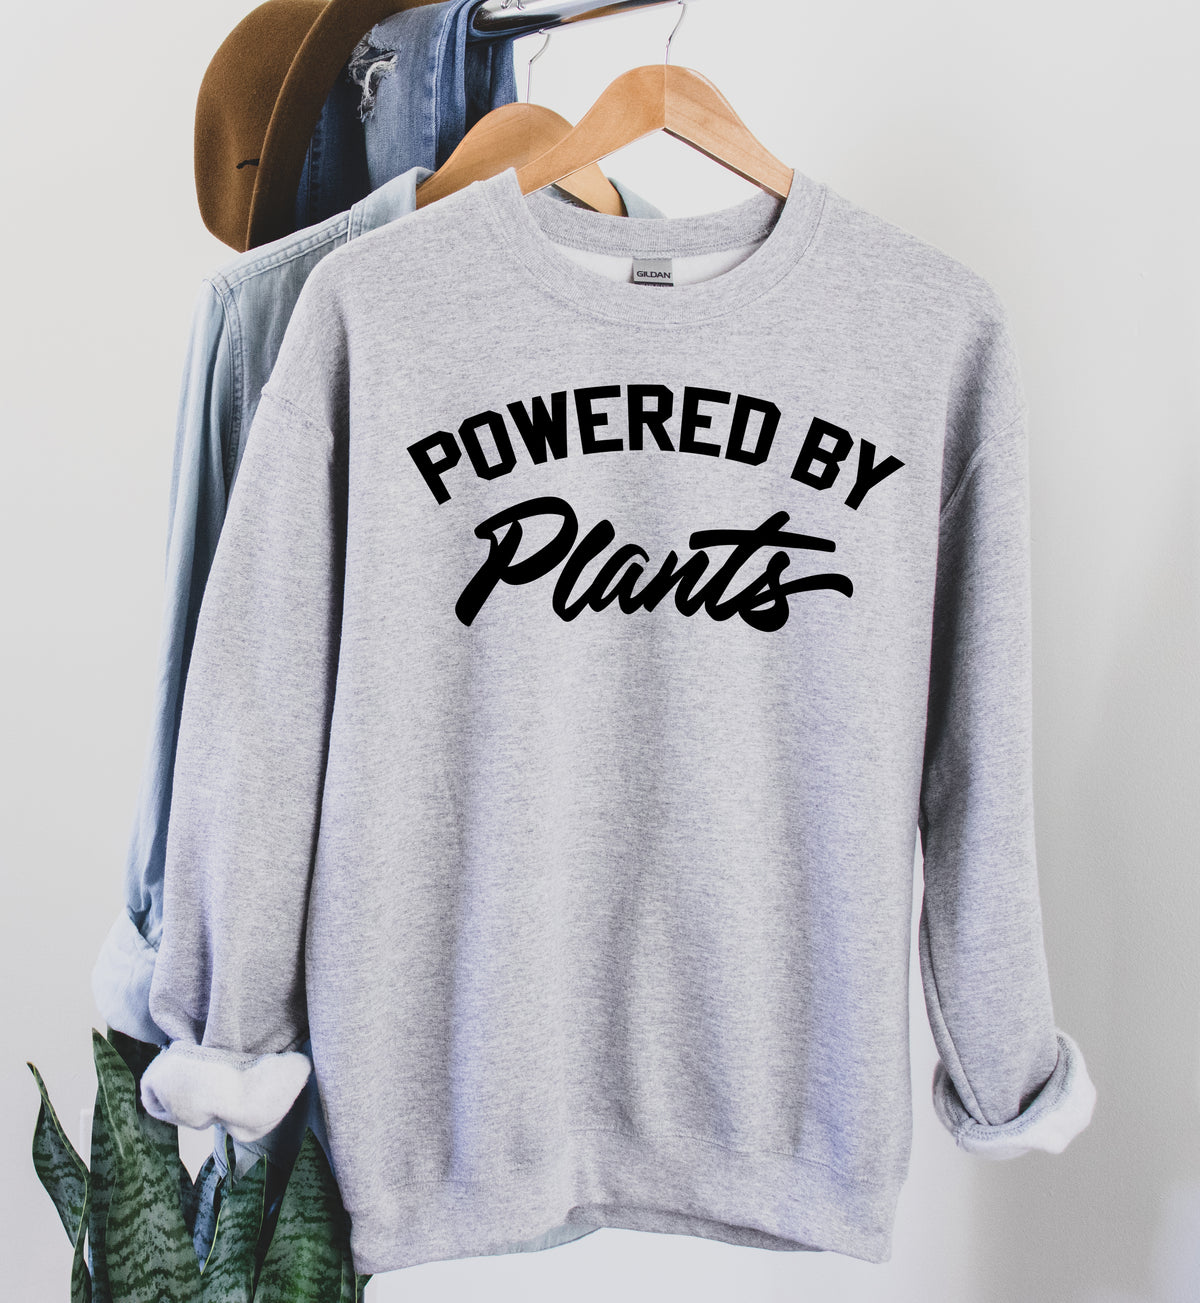 weed vegetarian sweatshirt - HighCiti